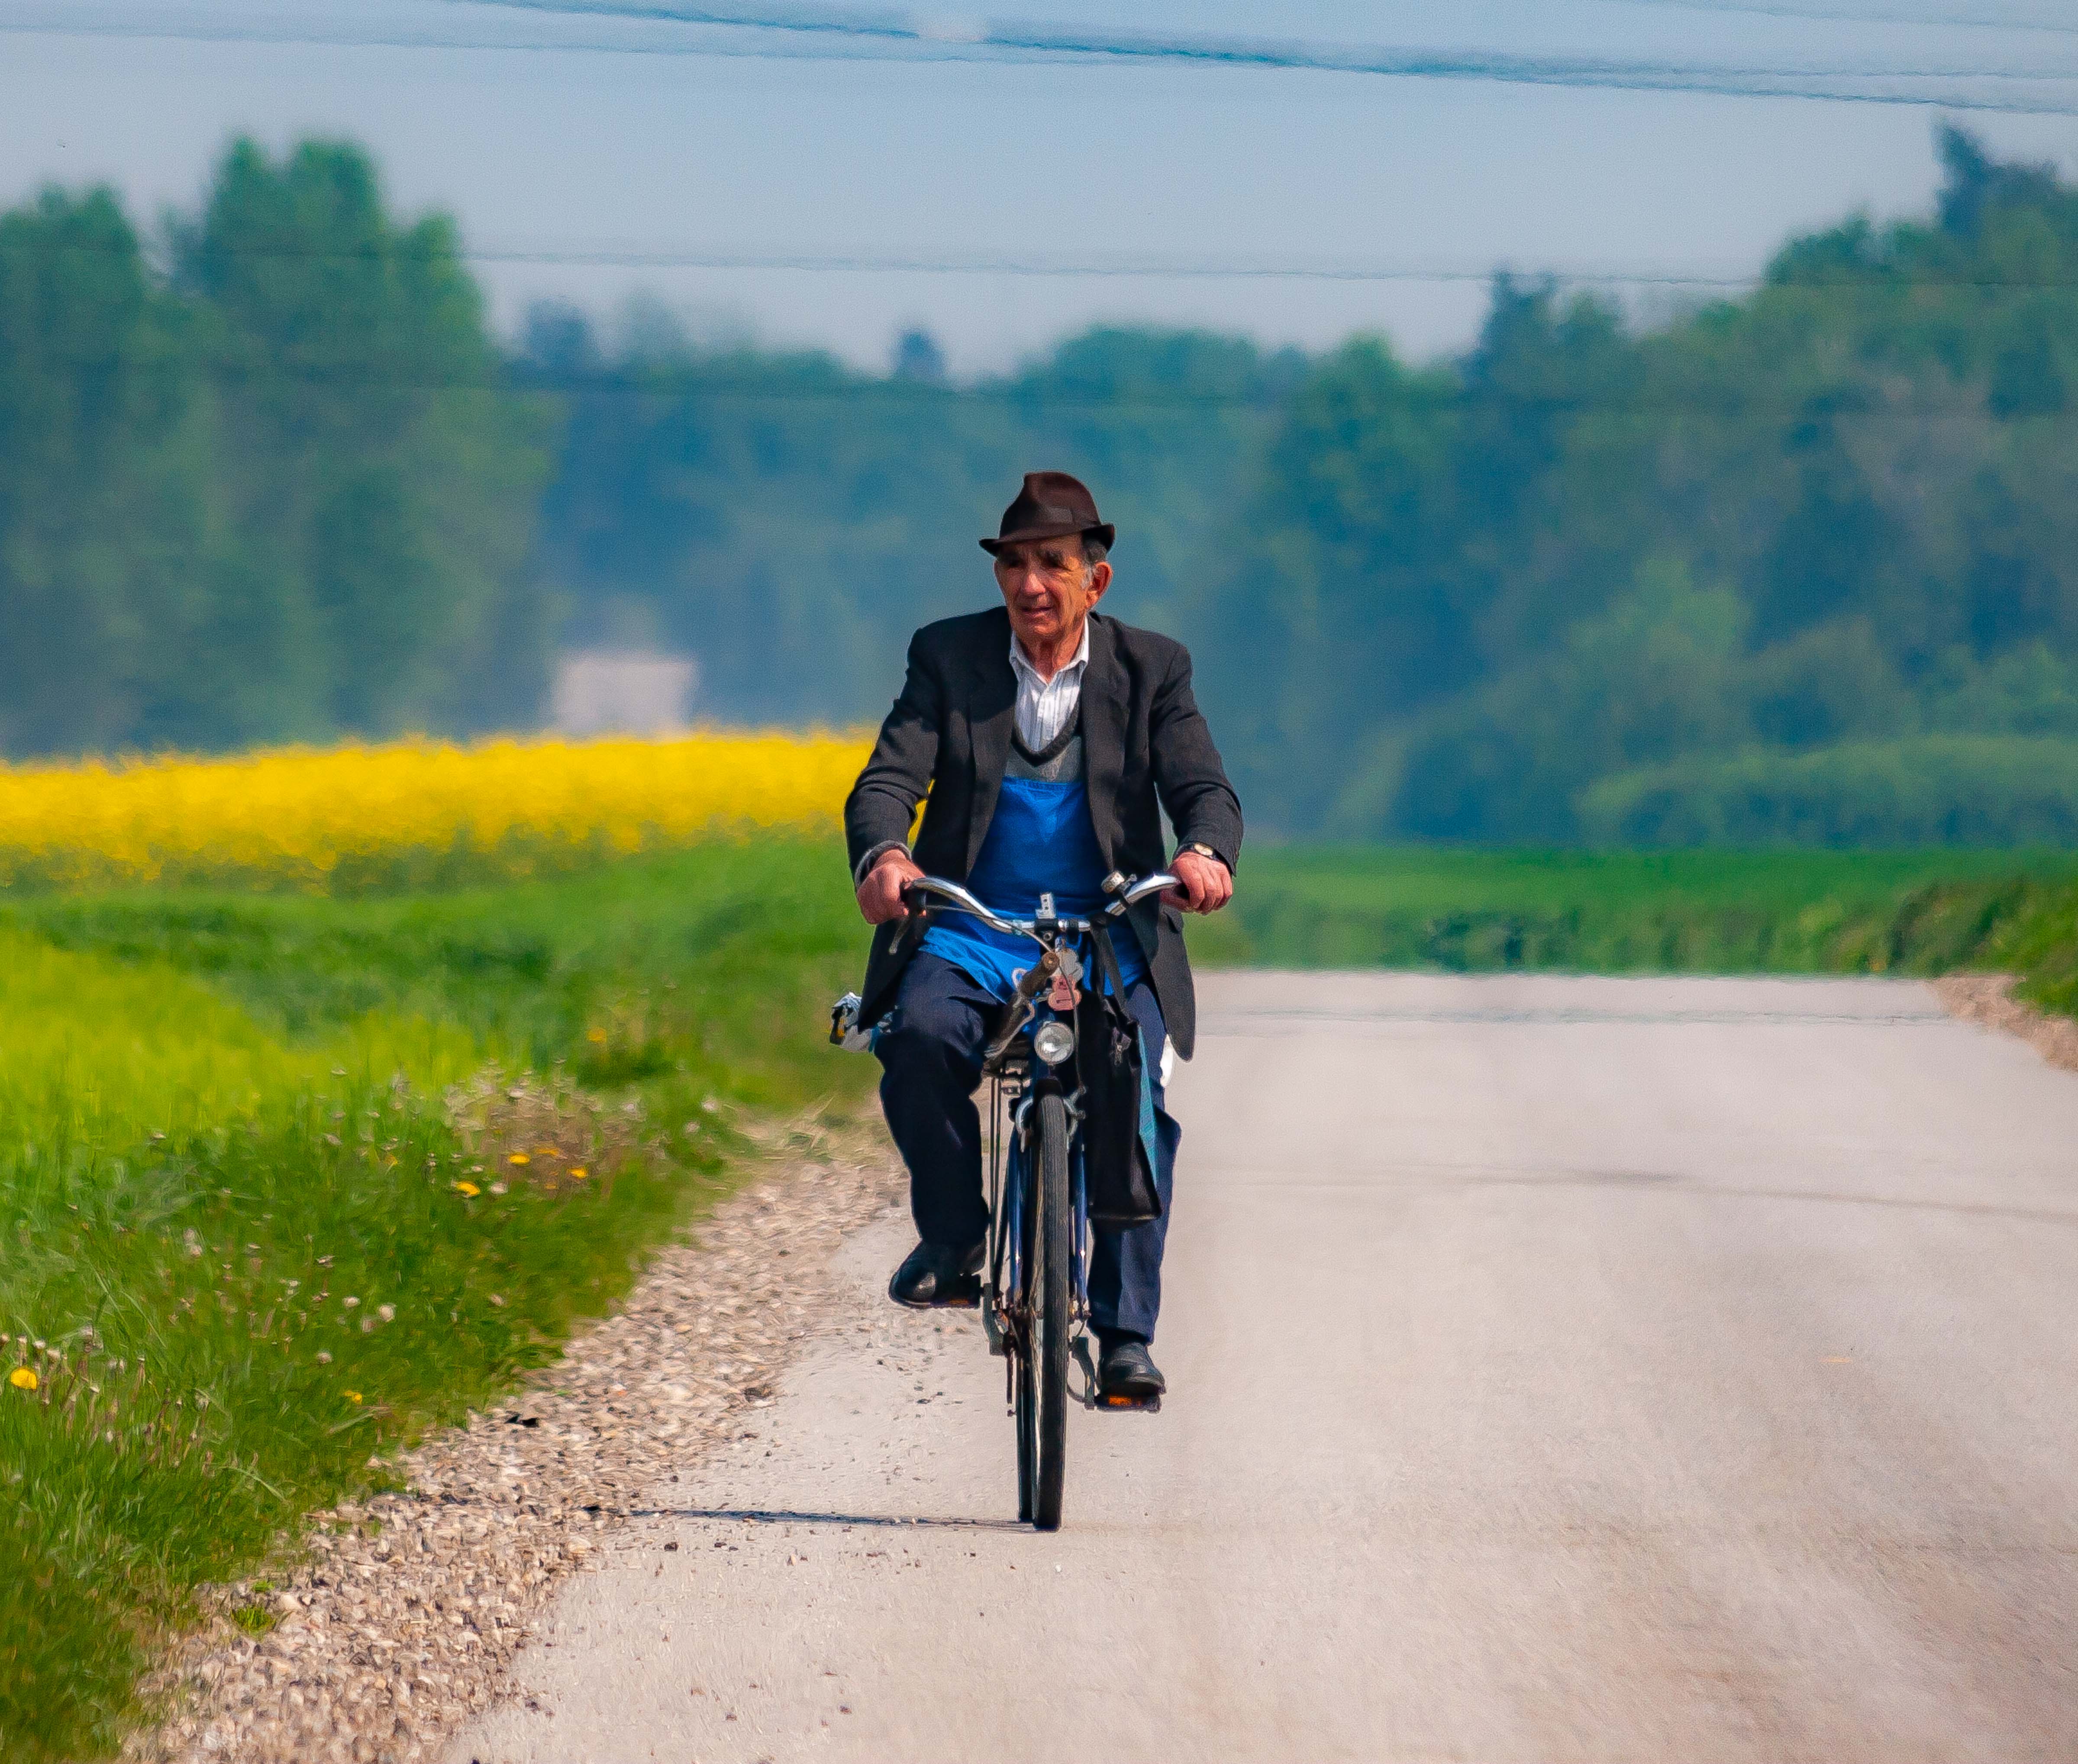 Slovenia, Kidricevo Prov, Man On Bicycle, 2006, IMG 5557